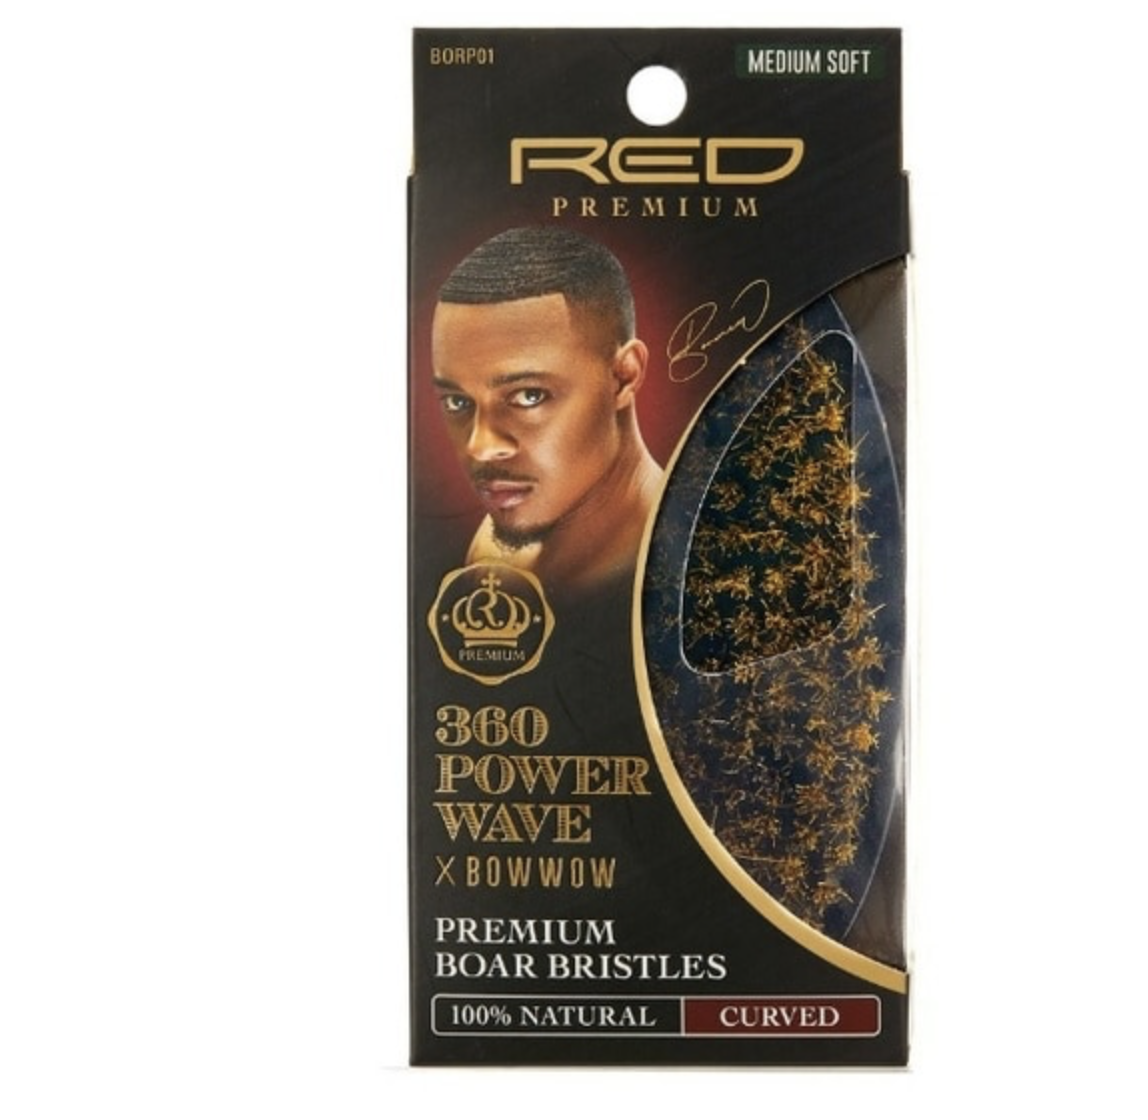 RED Premium | 360 Power Wave X Bow Wow Brush (Medium Soft) PALM #BORP01 - BPolished Beauty Supply